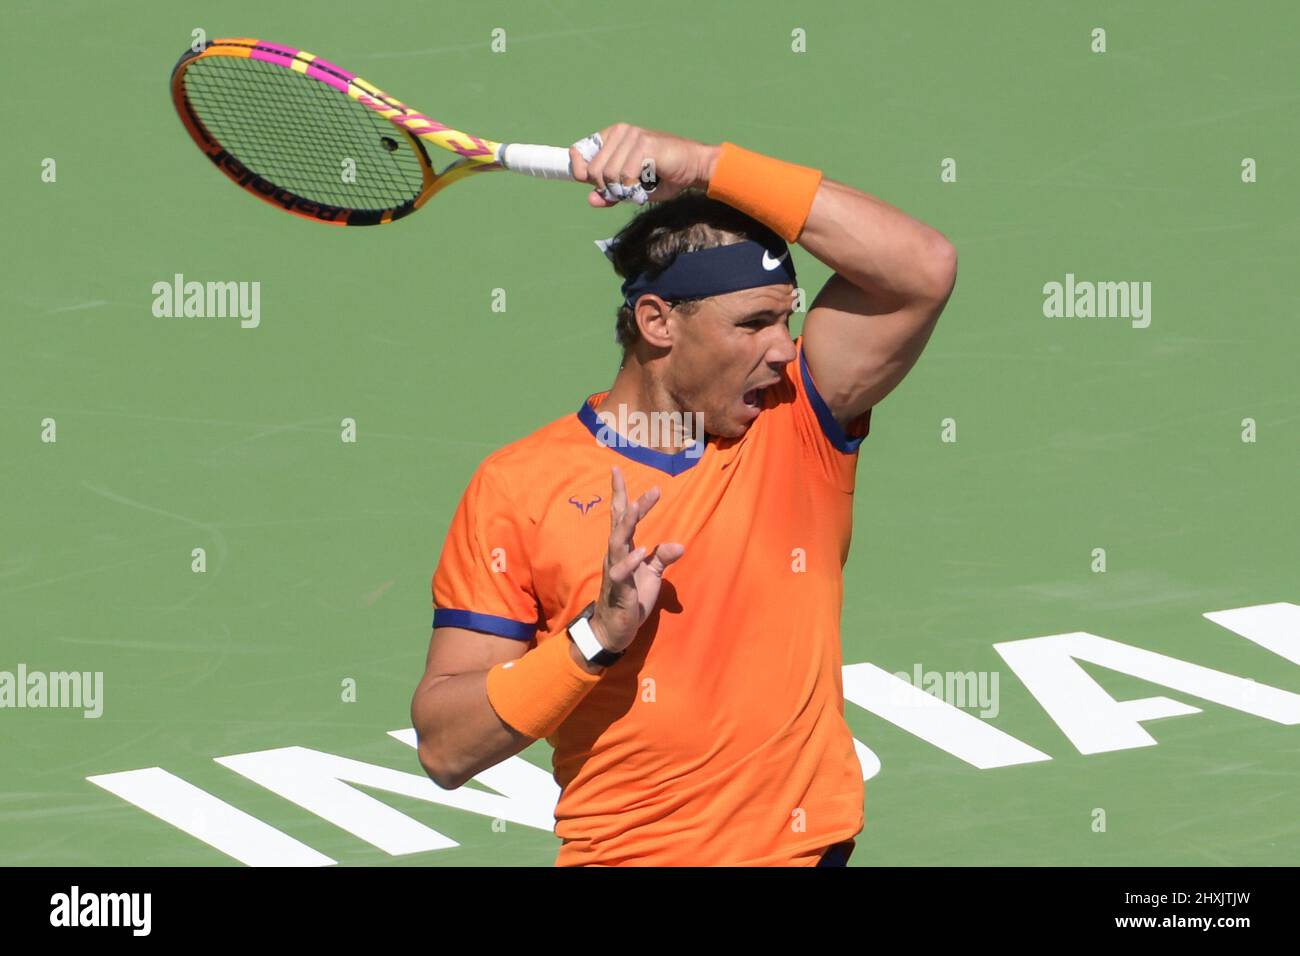 Nadal vs korda002 jpg hi-res stock photography and images